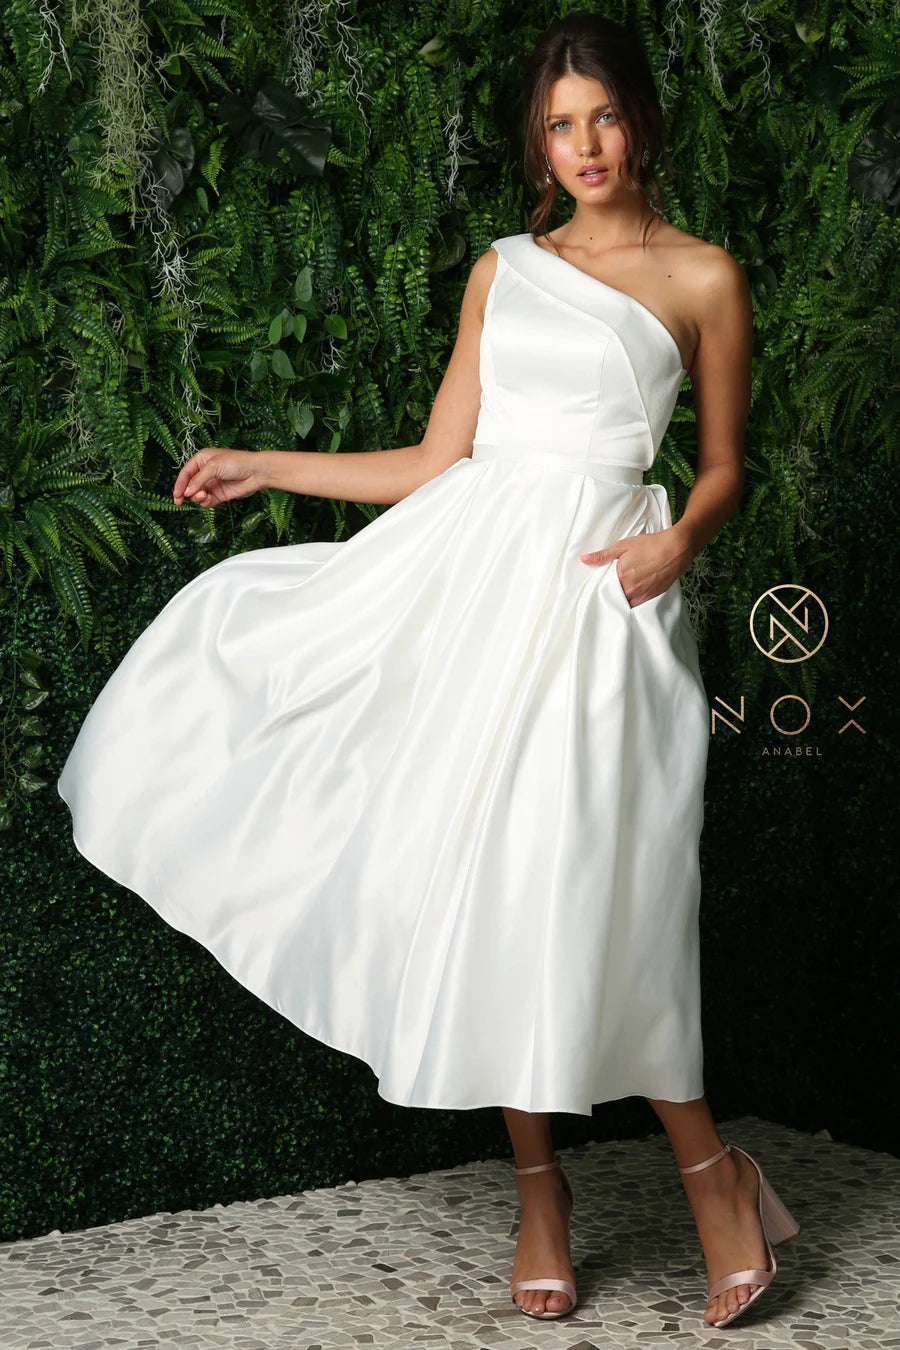 Dress Glass JE931W Formals Slipper line – Nox Formal Anabel Wedding One White A short Shoulder